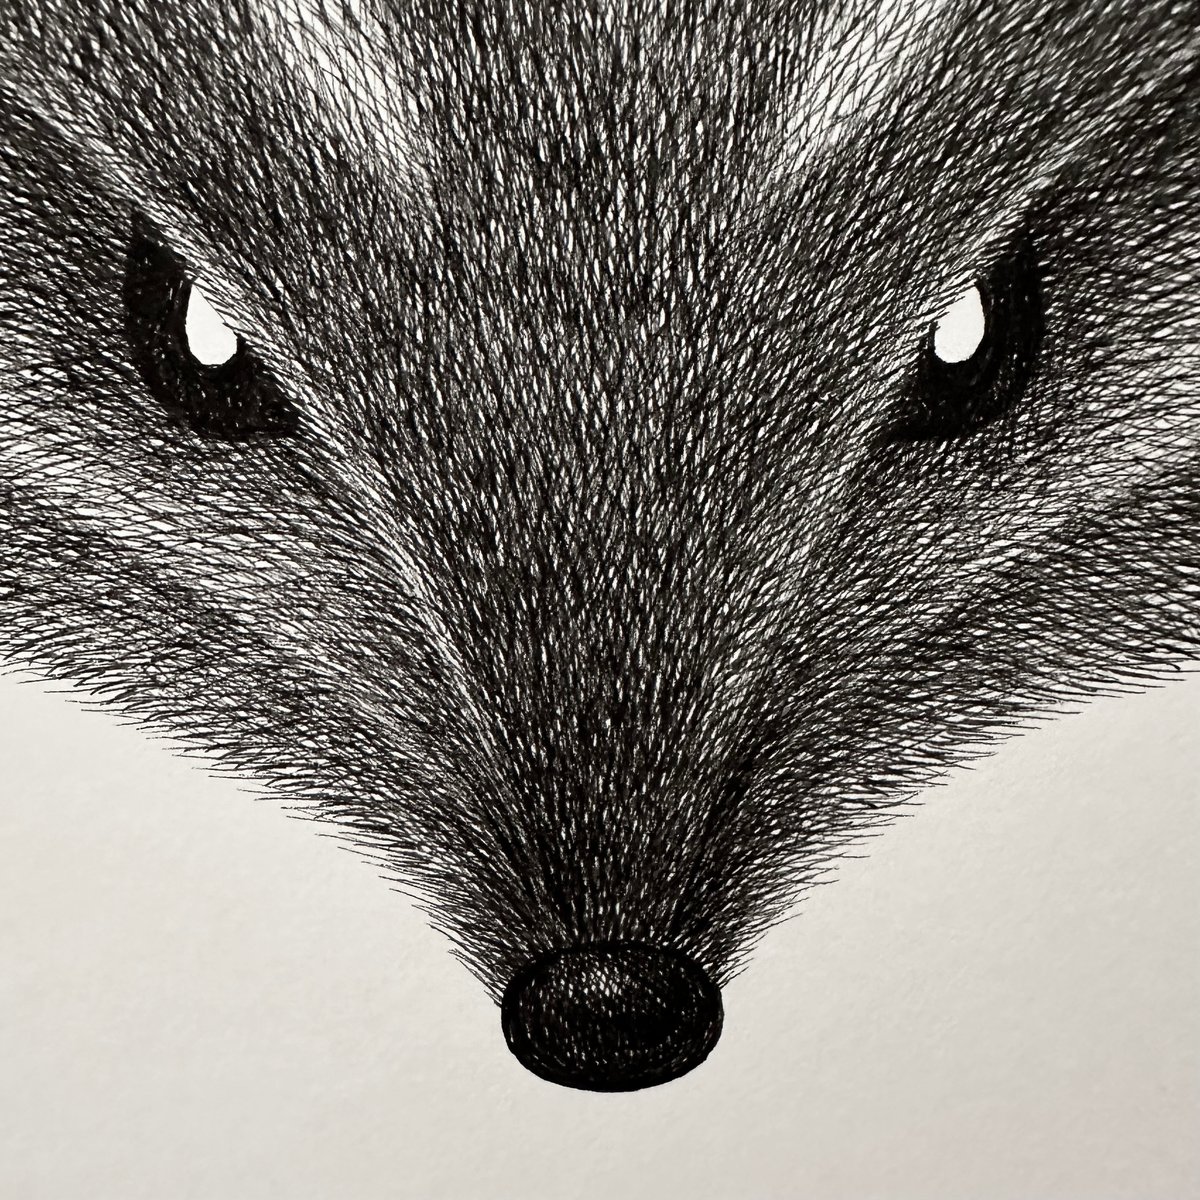 Image of Fox Original Artwork